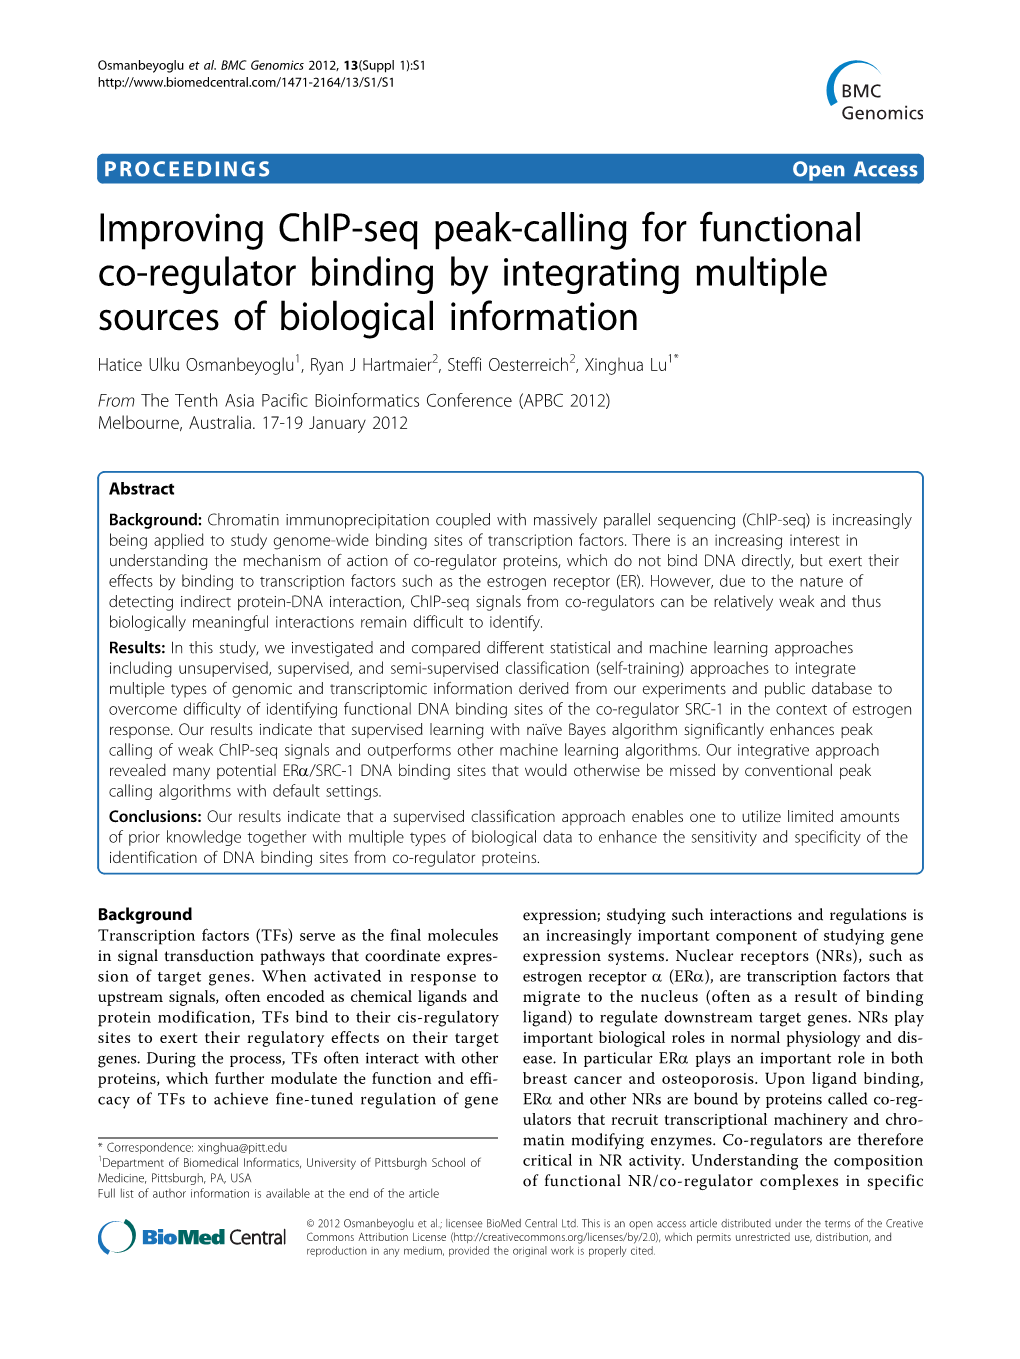 Improving Chip-Seq Peak-Calling for Functional Co-Regulator Binding By